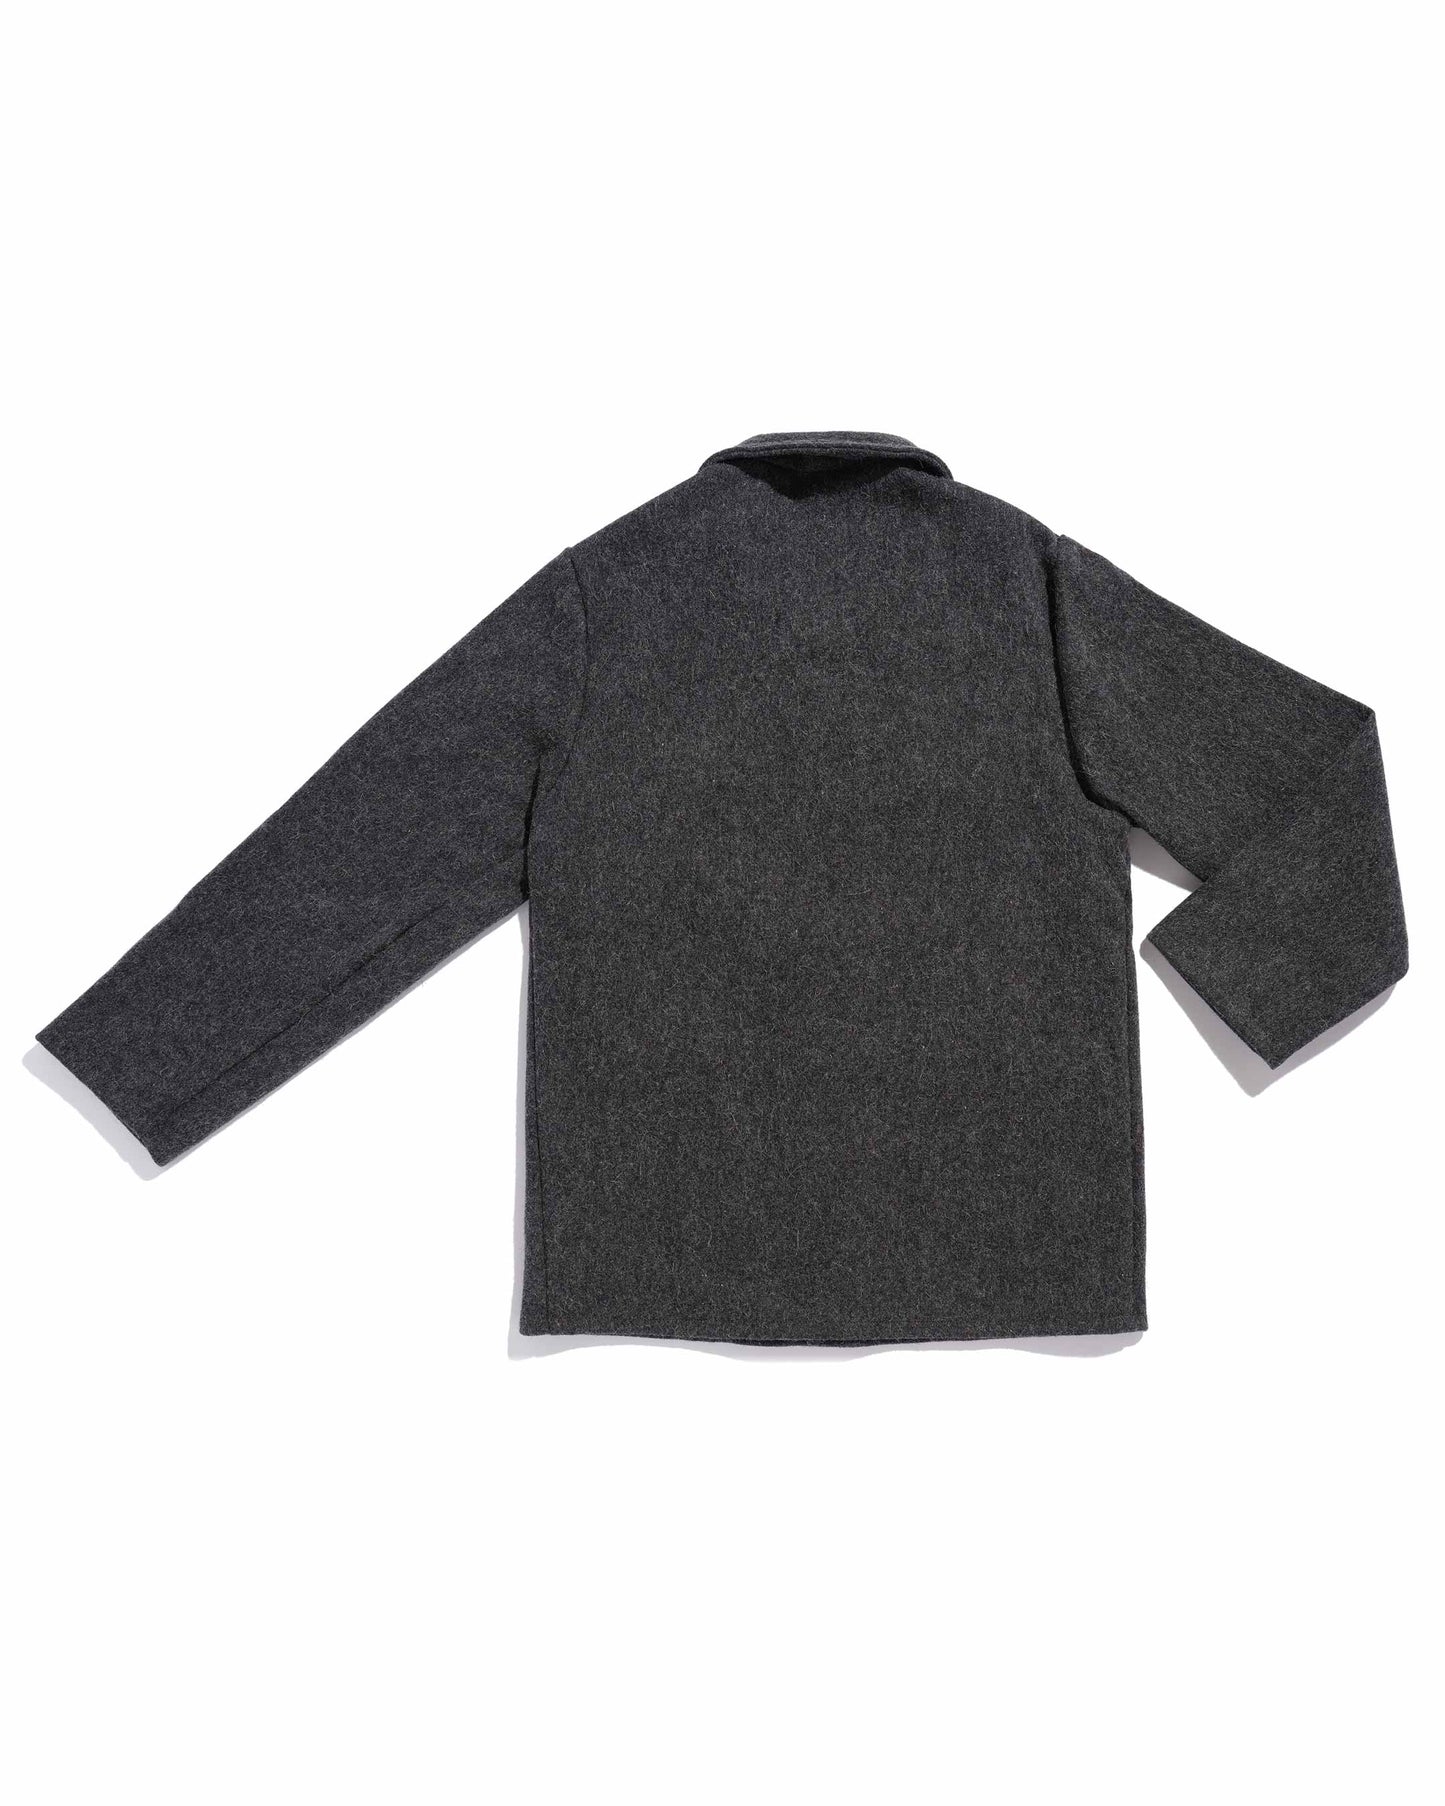 Le Laboureur gray wool jacket 